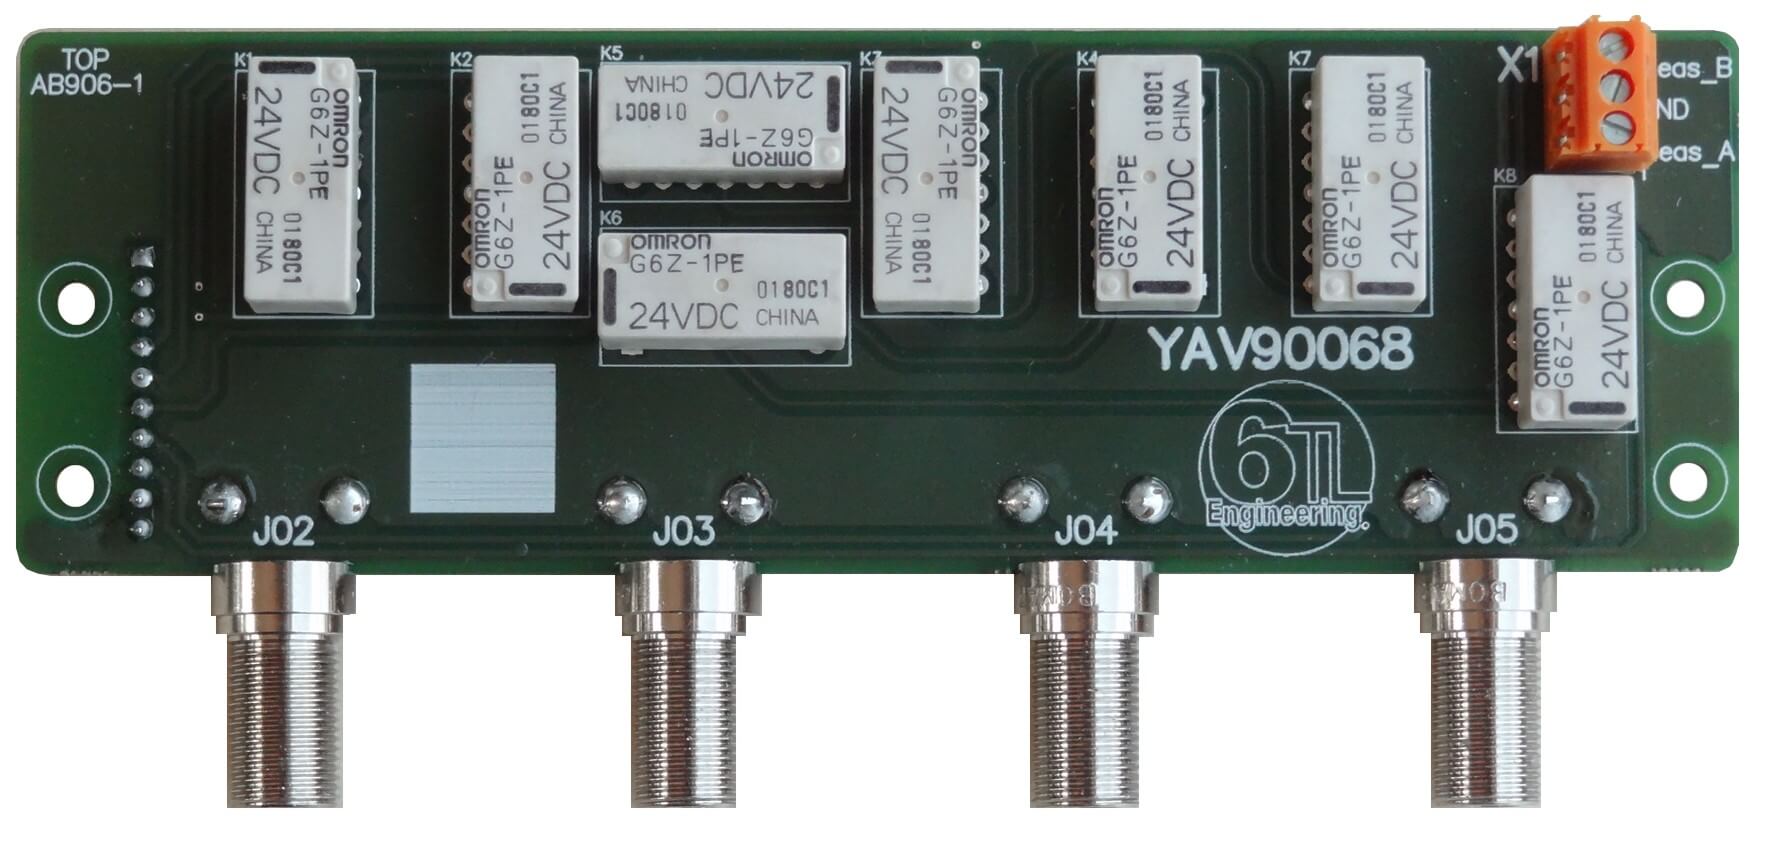 Satellite TV & HDMI Flex Modules - YAV90068